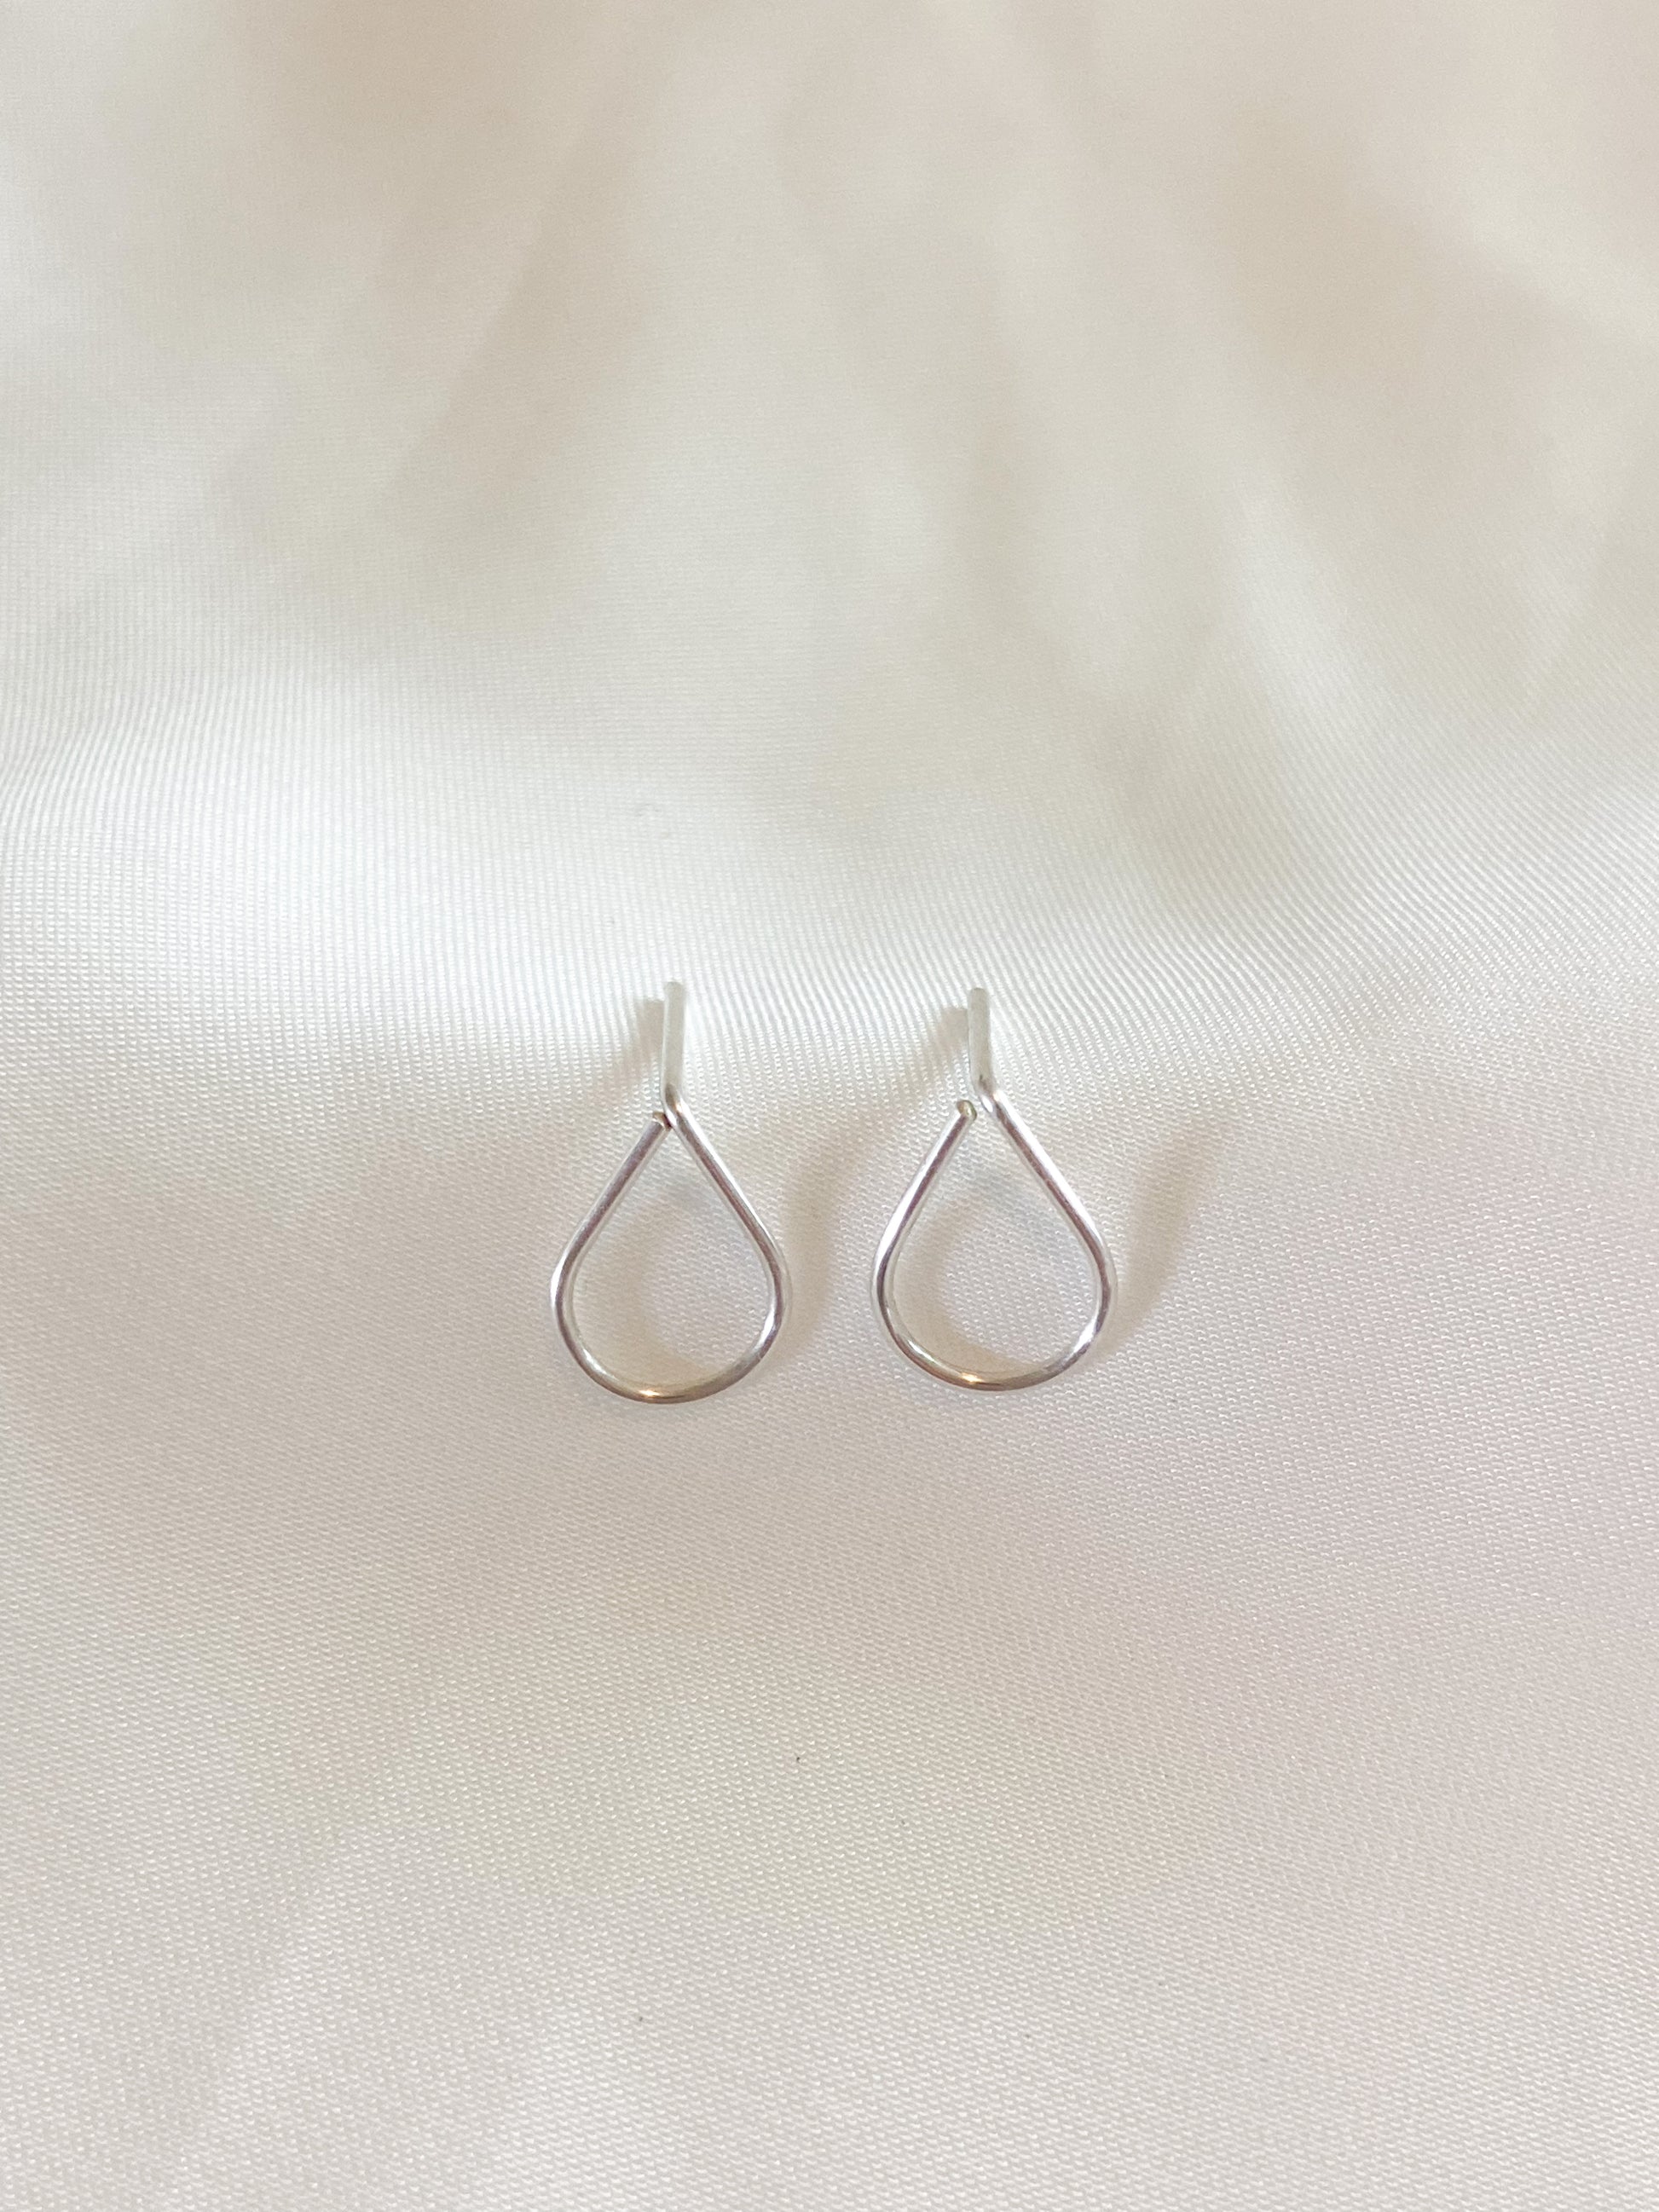 Sterling Silver wire teardrop shaped earring studs on white background.